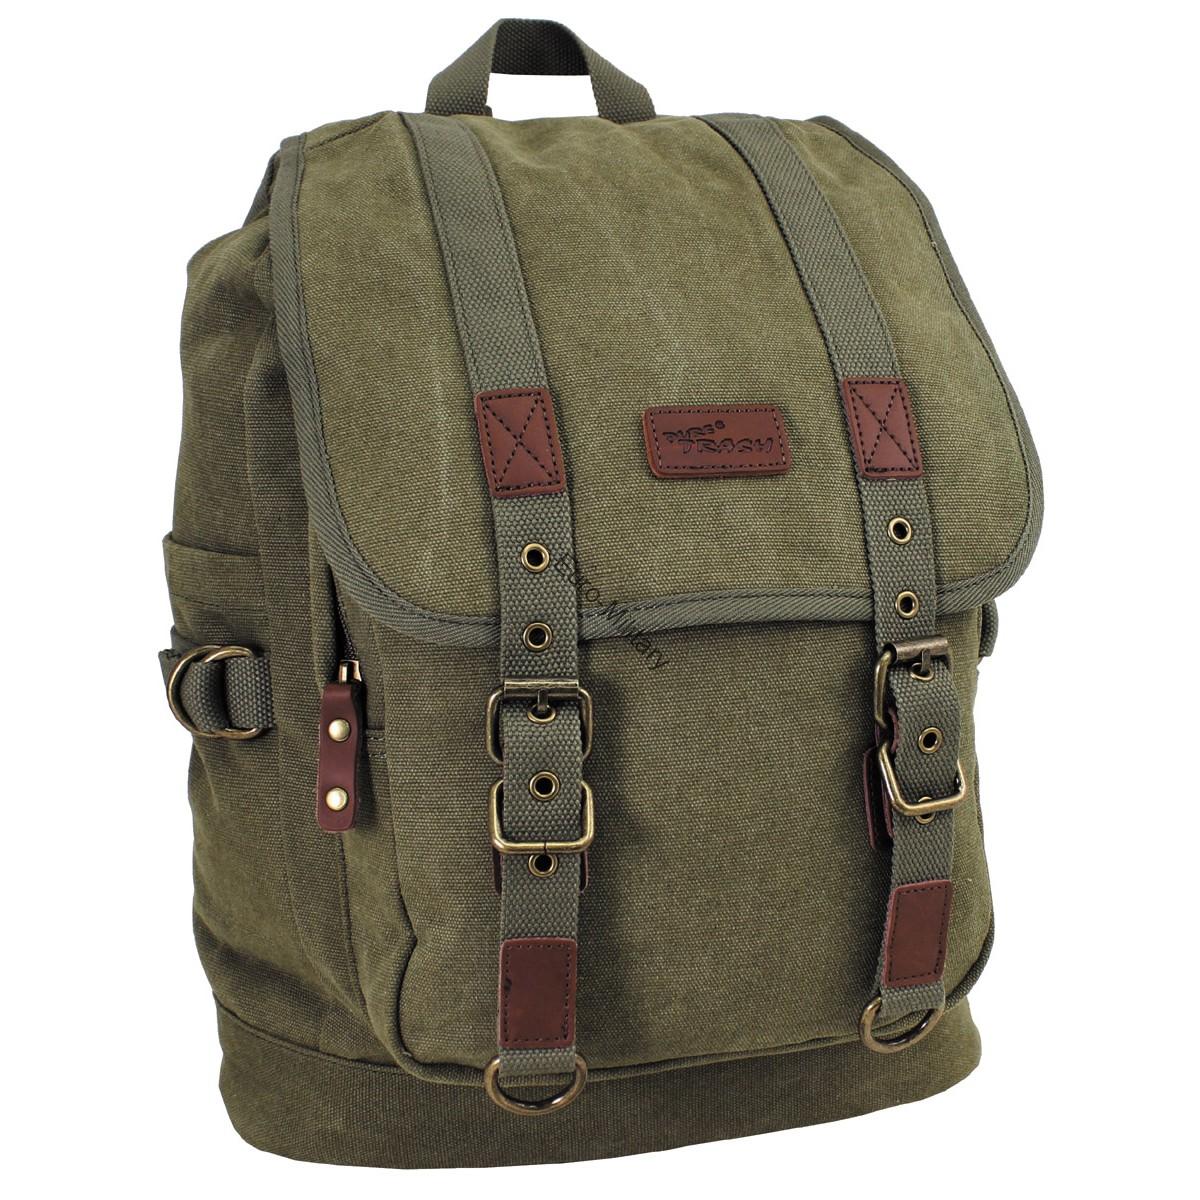 Retro Vintage Outdoor Canvas Backpack Bag 35L - OD Green